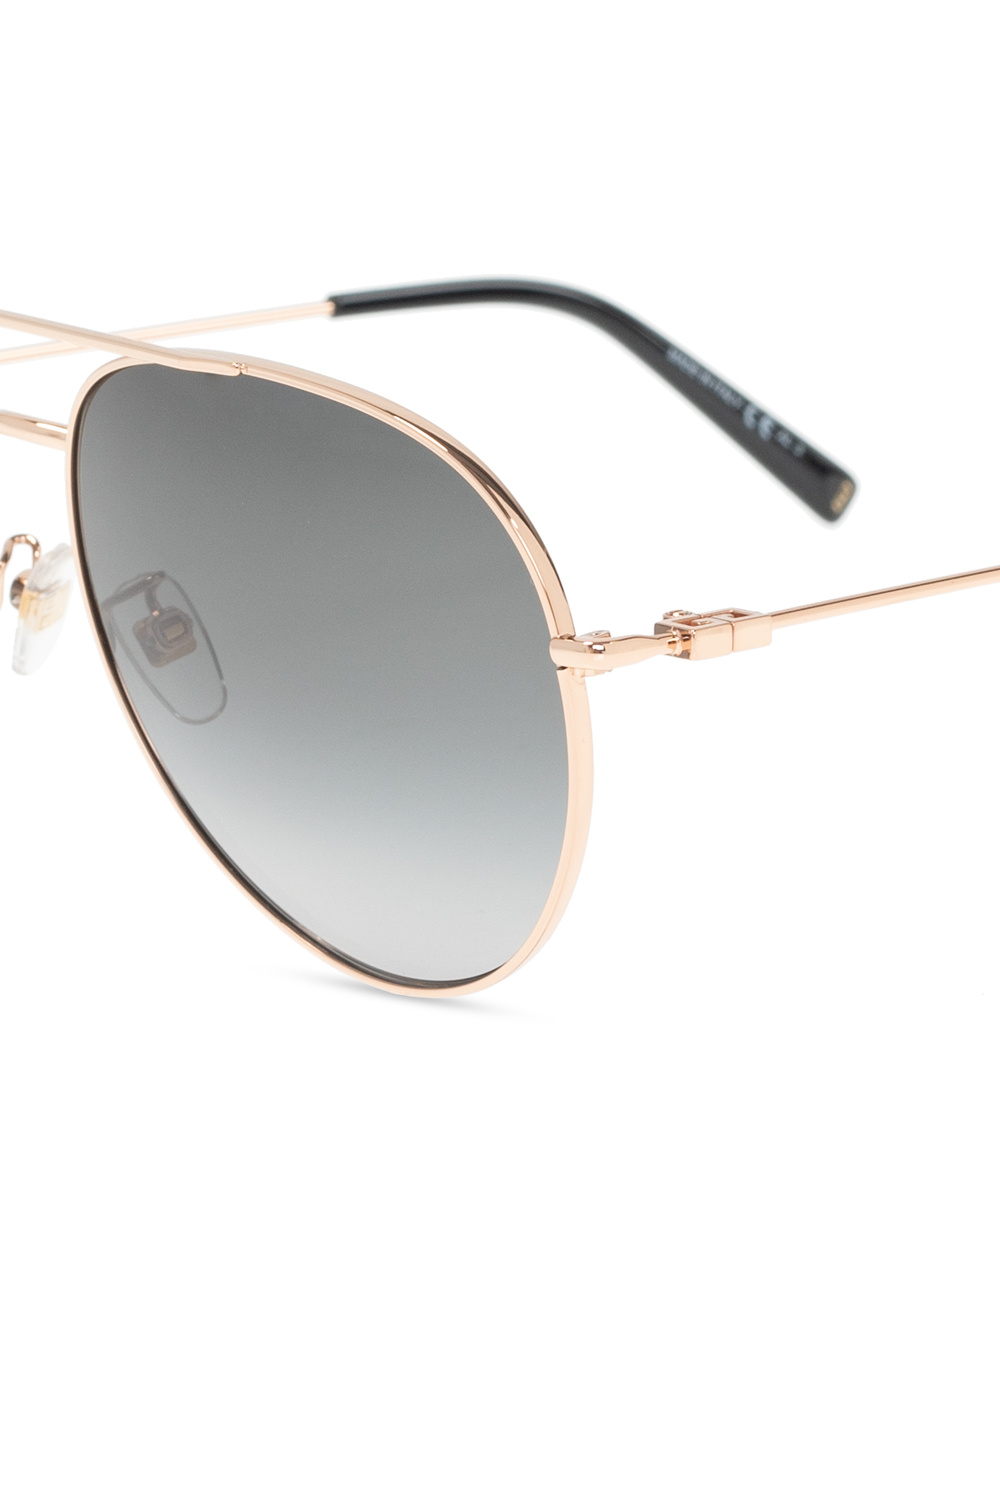 Givenchy gotha sunglasses with logo